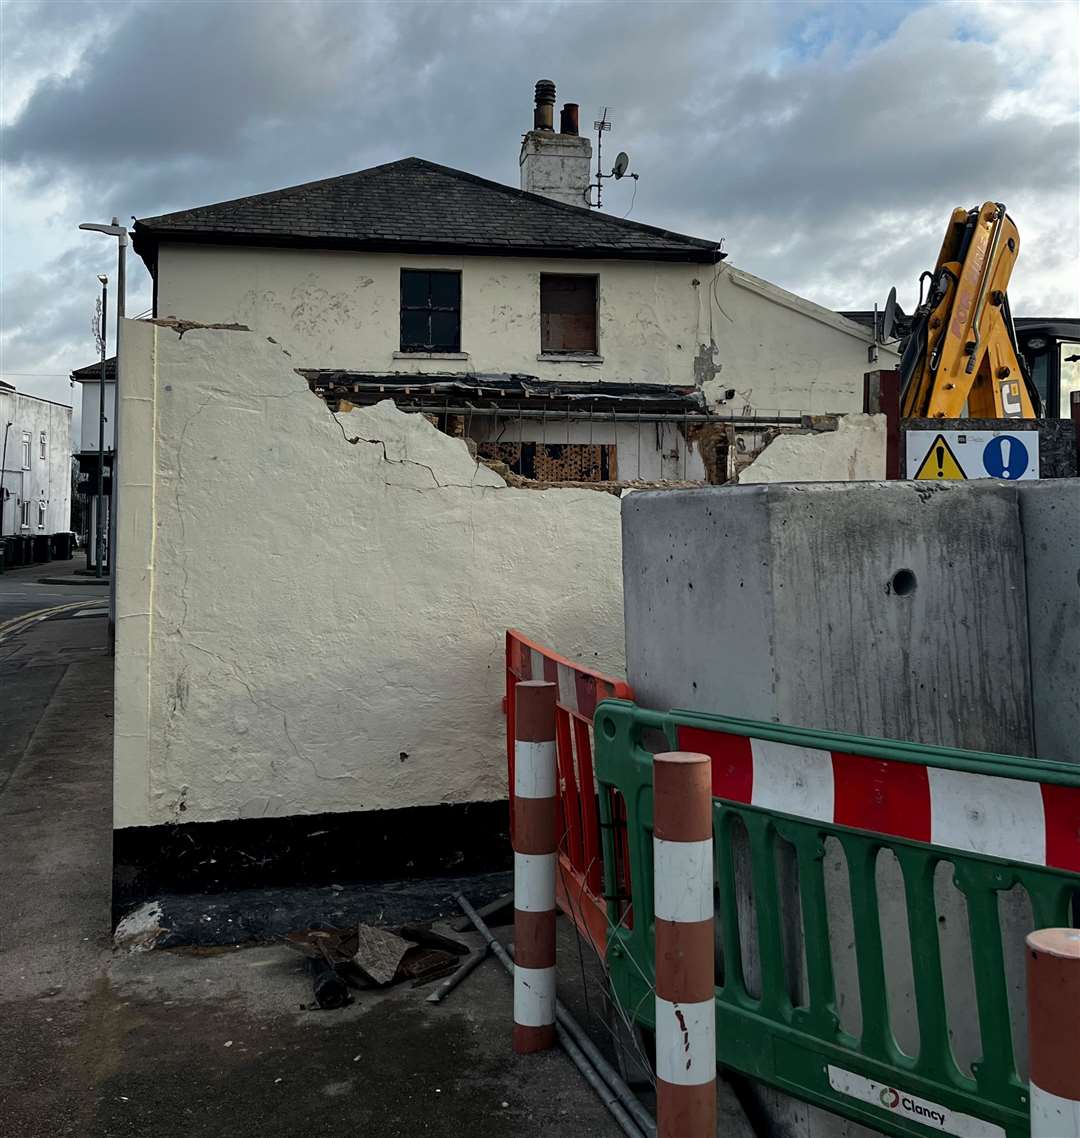 The Wheatsheaf pub in Swanscombe High Street is being demolished